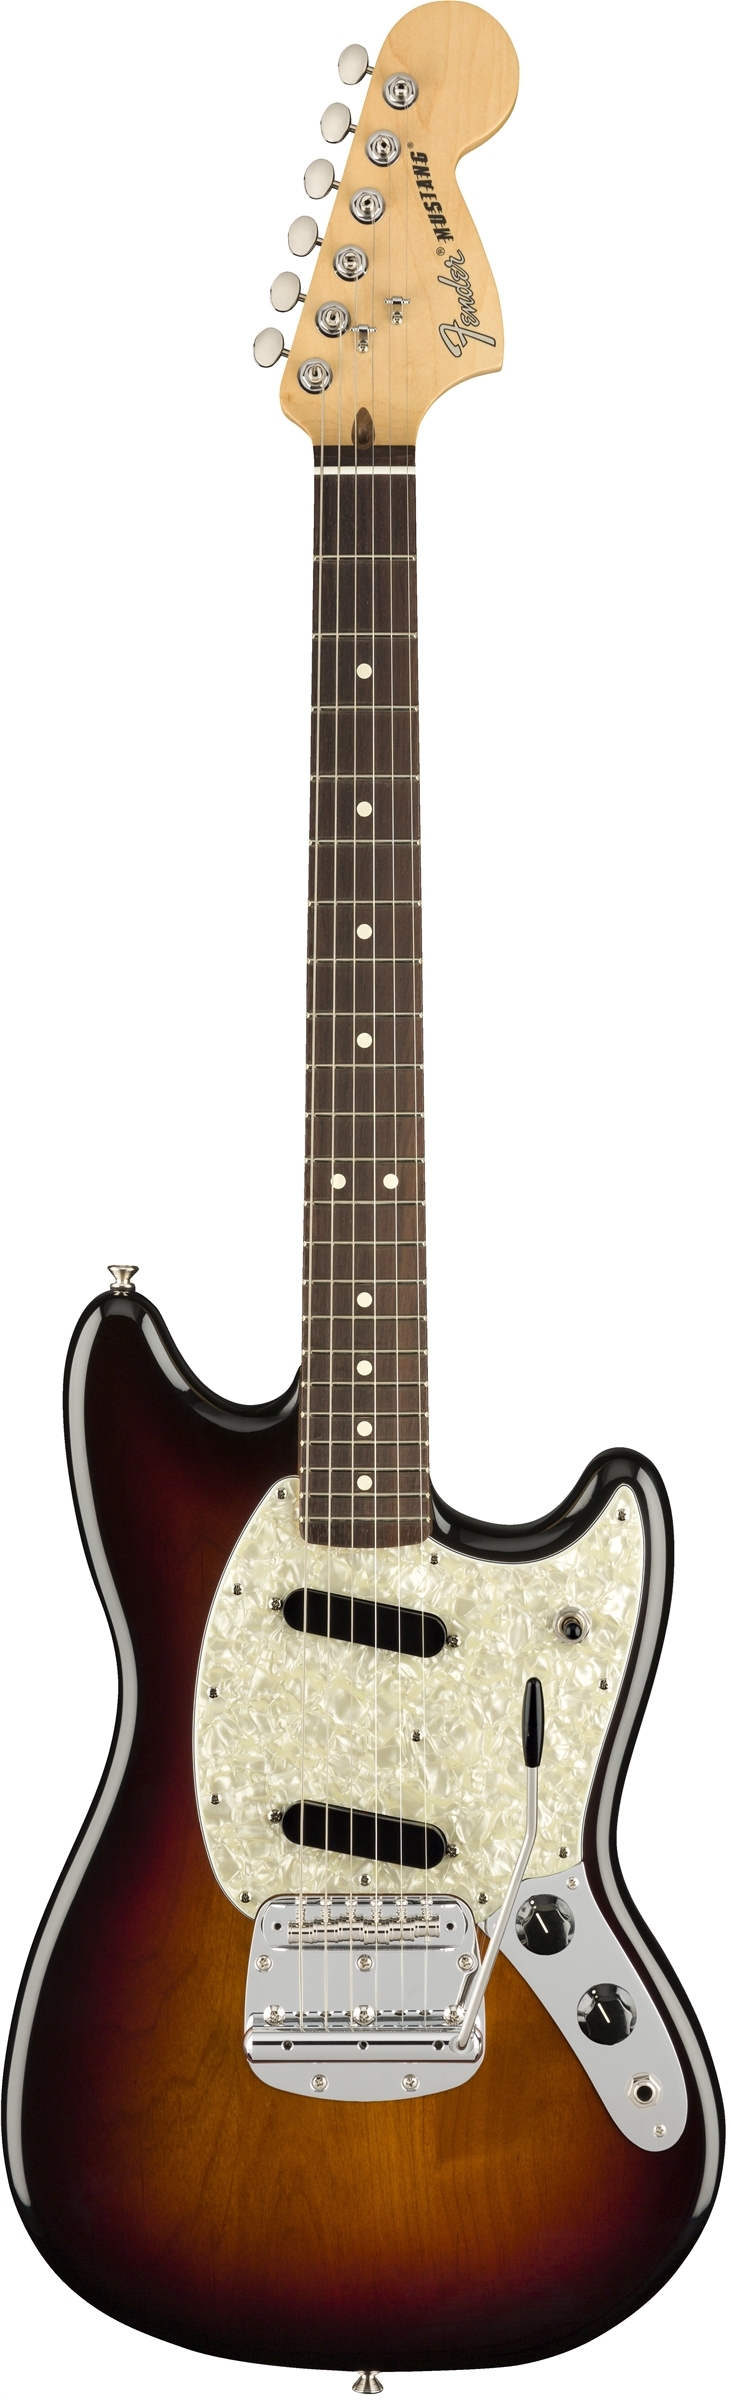 Fender American Performer Mustang 3 colors sunburst